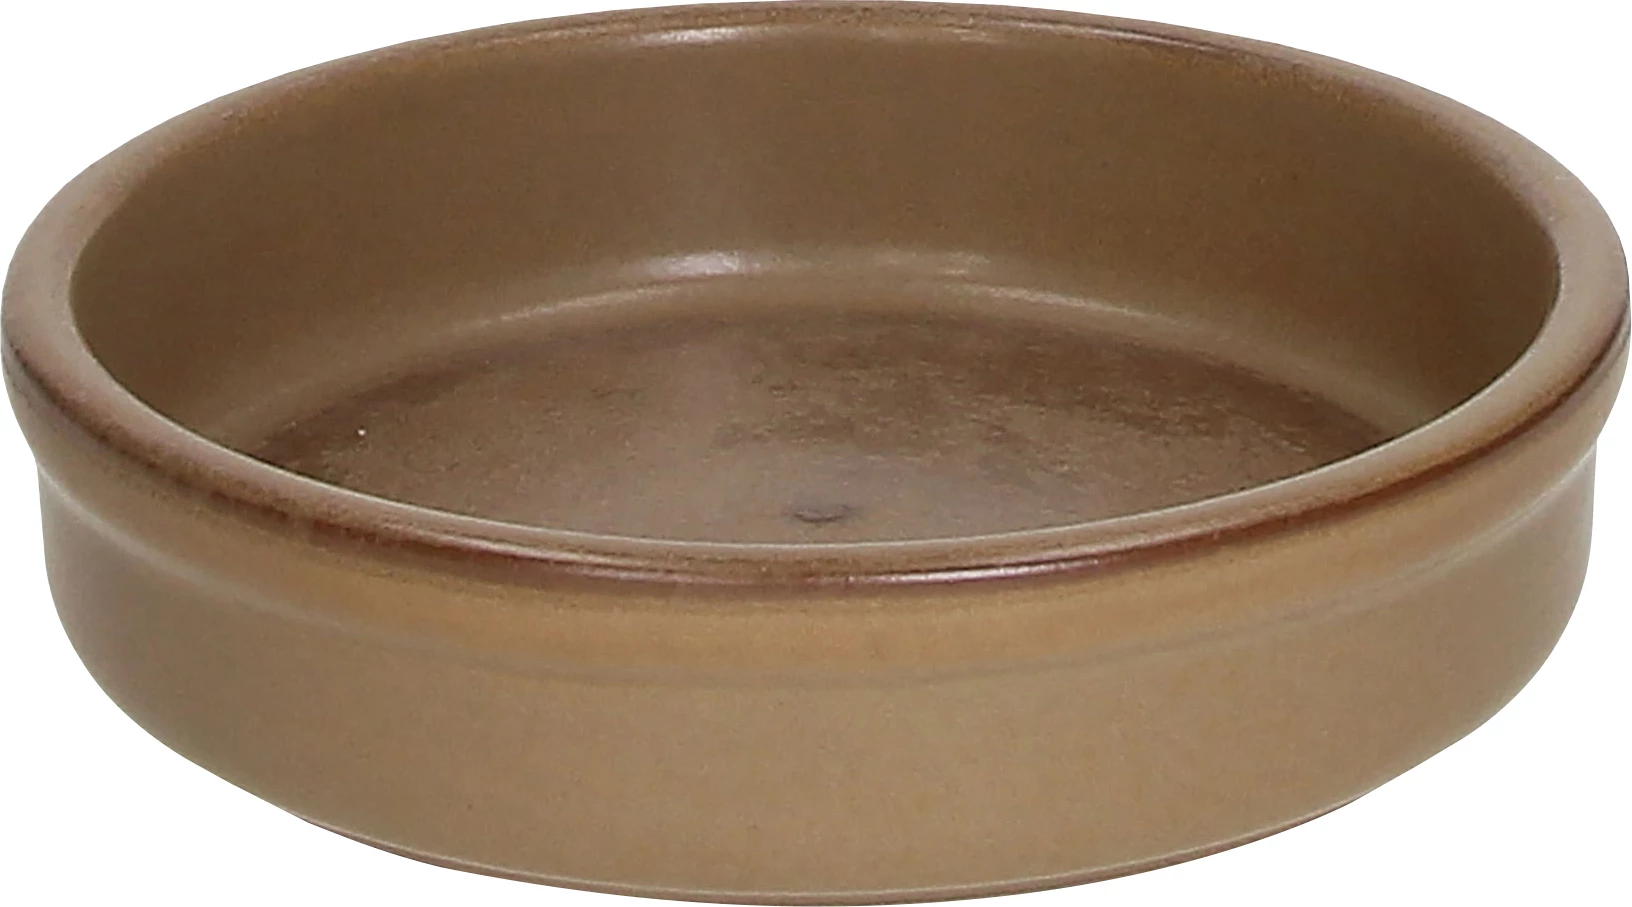 Tognana Terracotta skål, lav, brun, 32 cl, ø15 cm